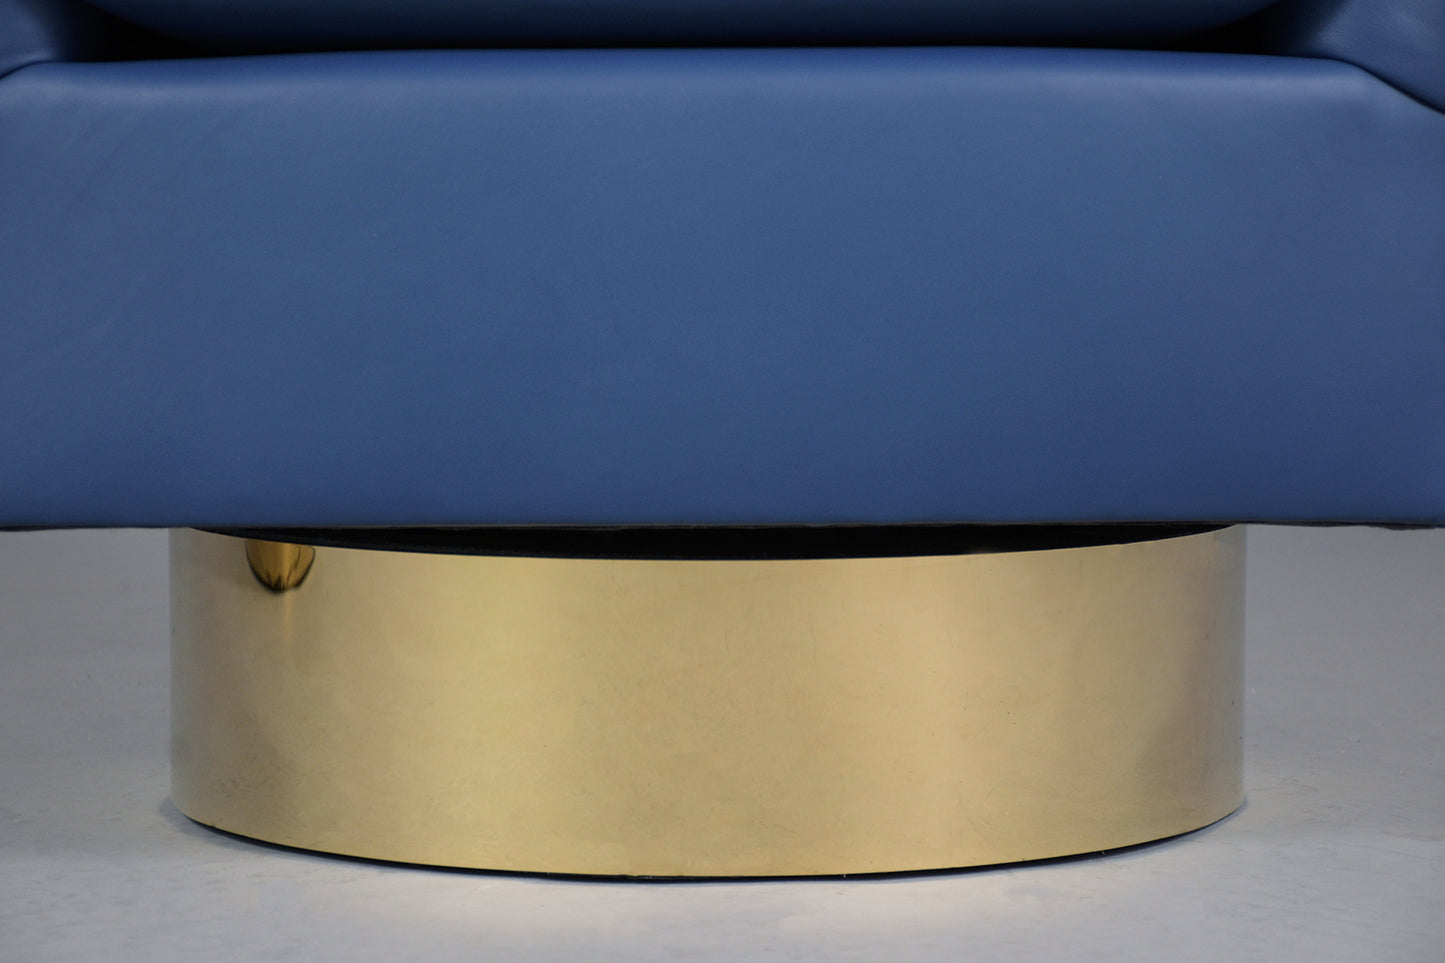 Milo Baughman-Inspired Vintage Brass Swivel Chairs: Mid-Century Elegance